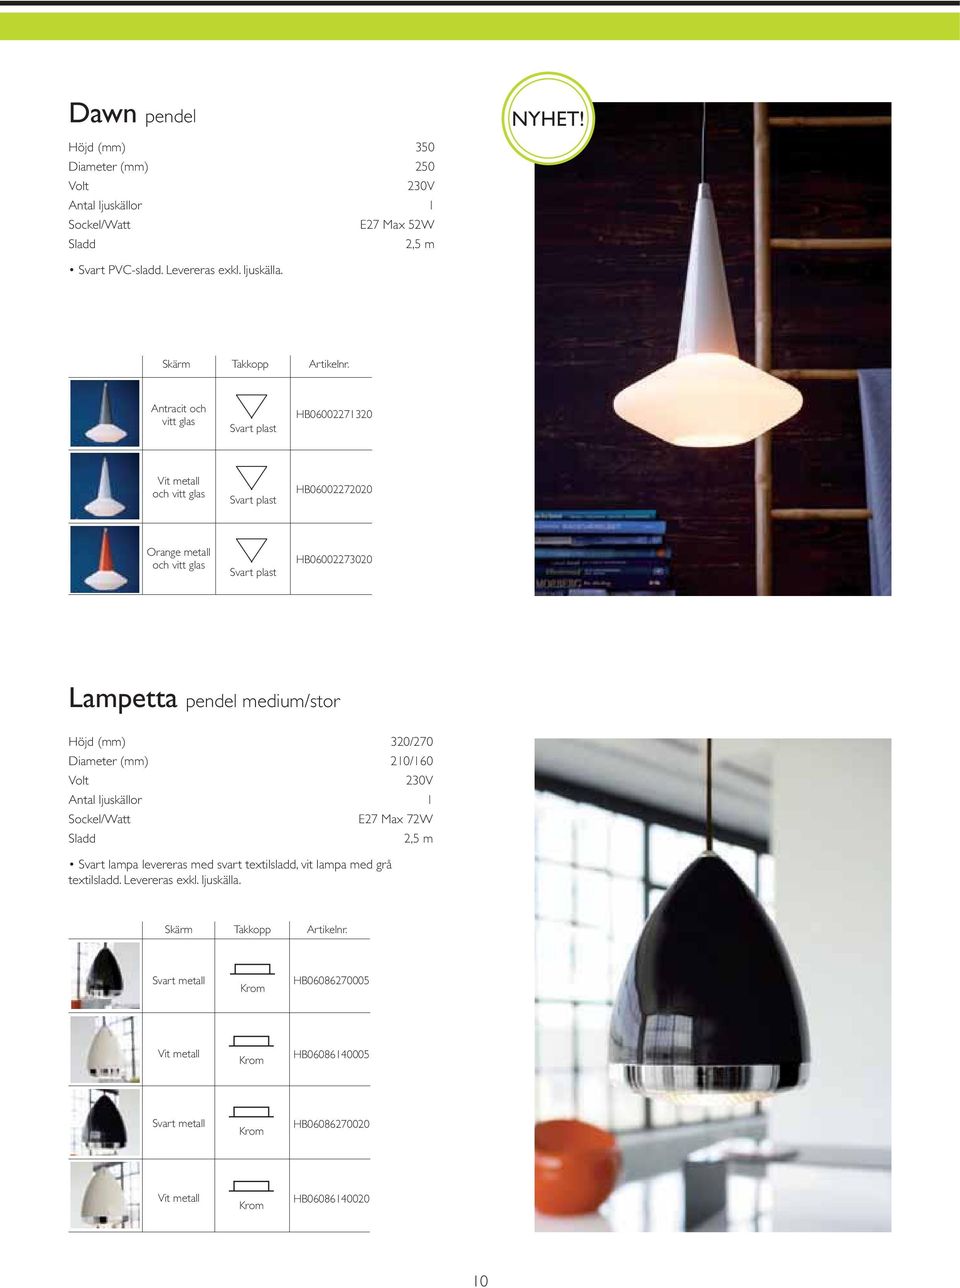 Lampetta pendel medium/stor Höjd (mm) 320/270 Diameter (mm) 210/160 E27 Max 72W 2,5 m Svart lampa levereras med svart textilsladd, vit lampa